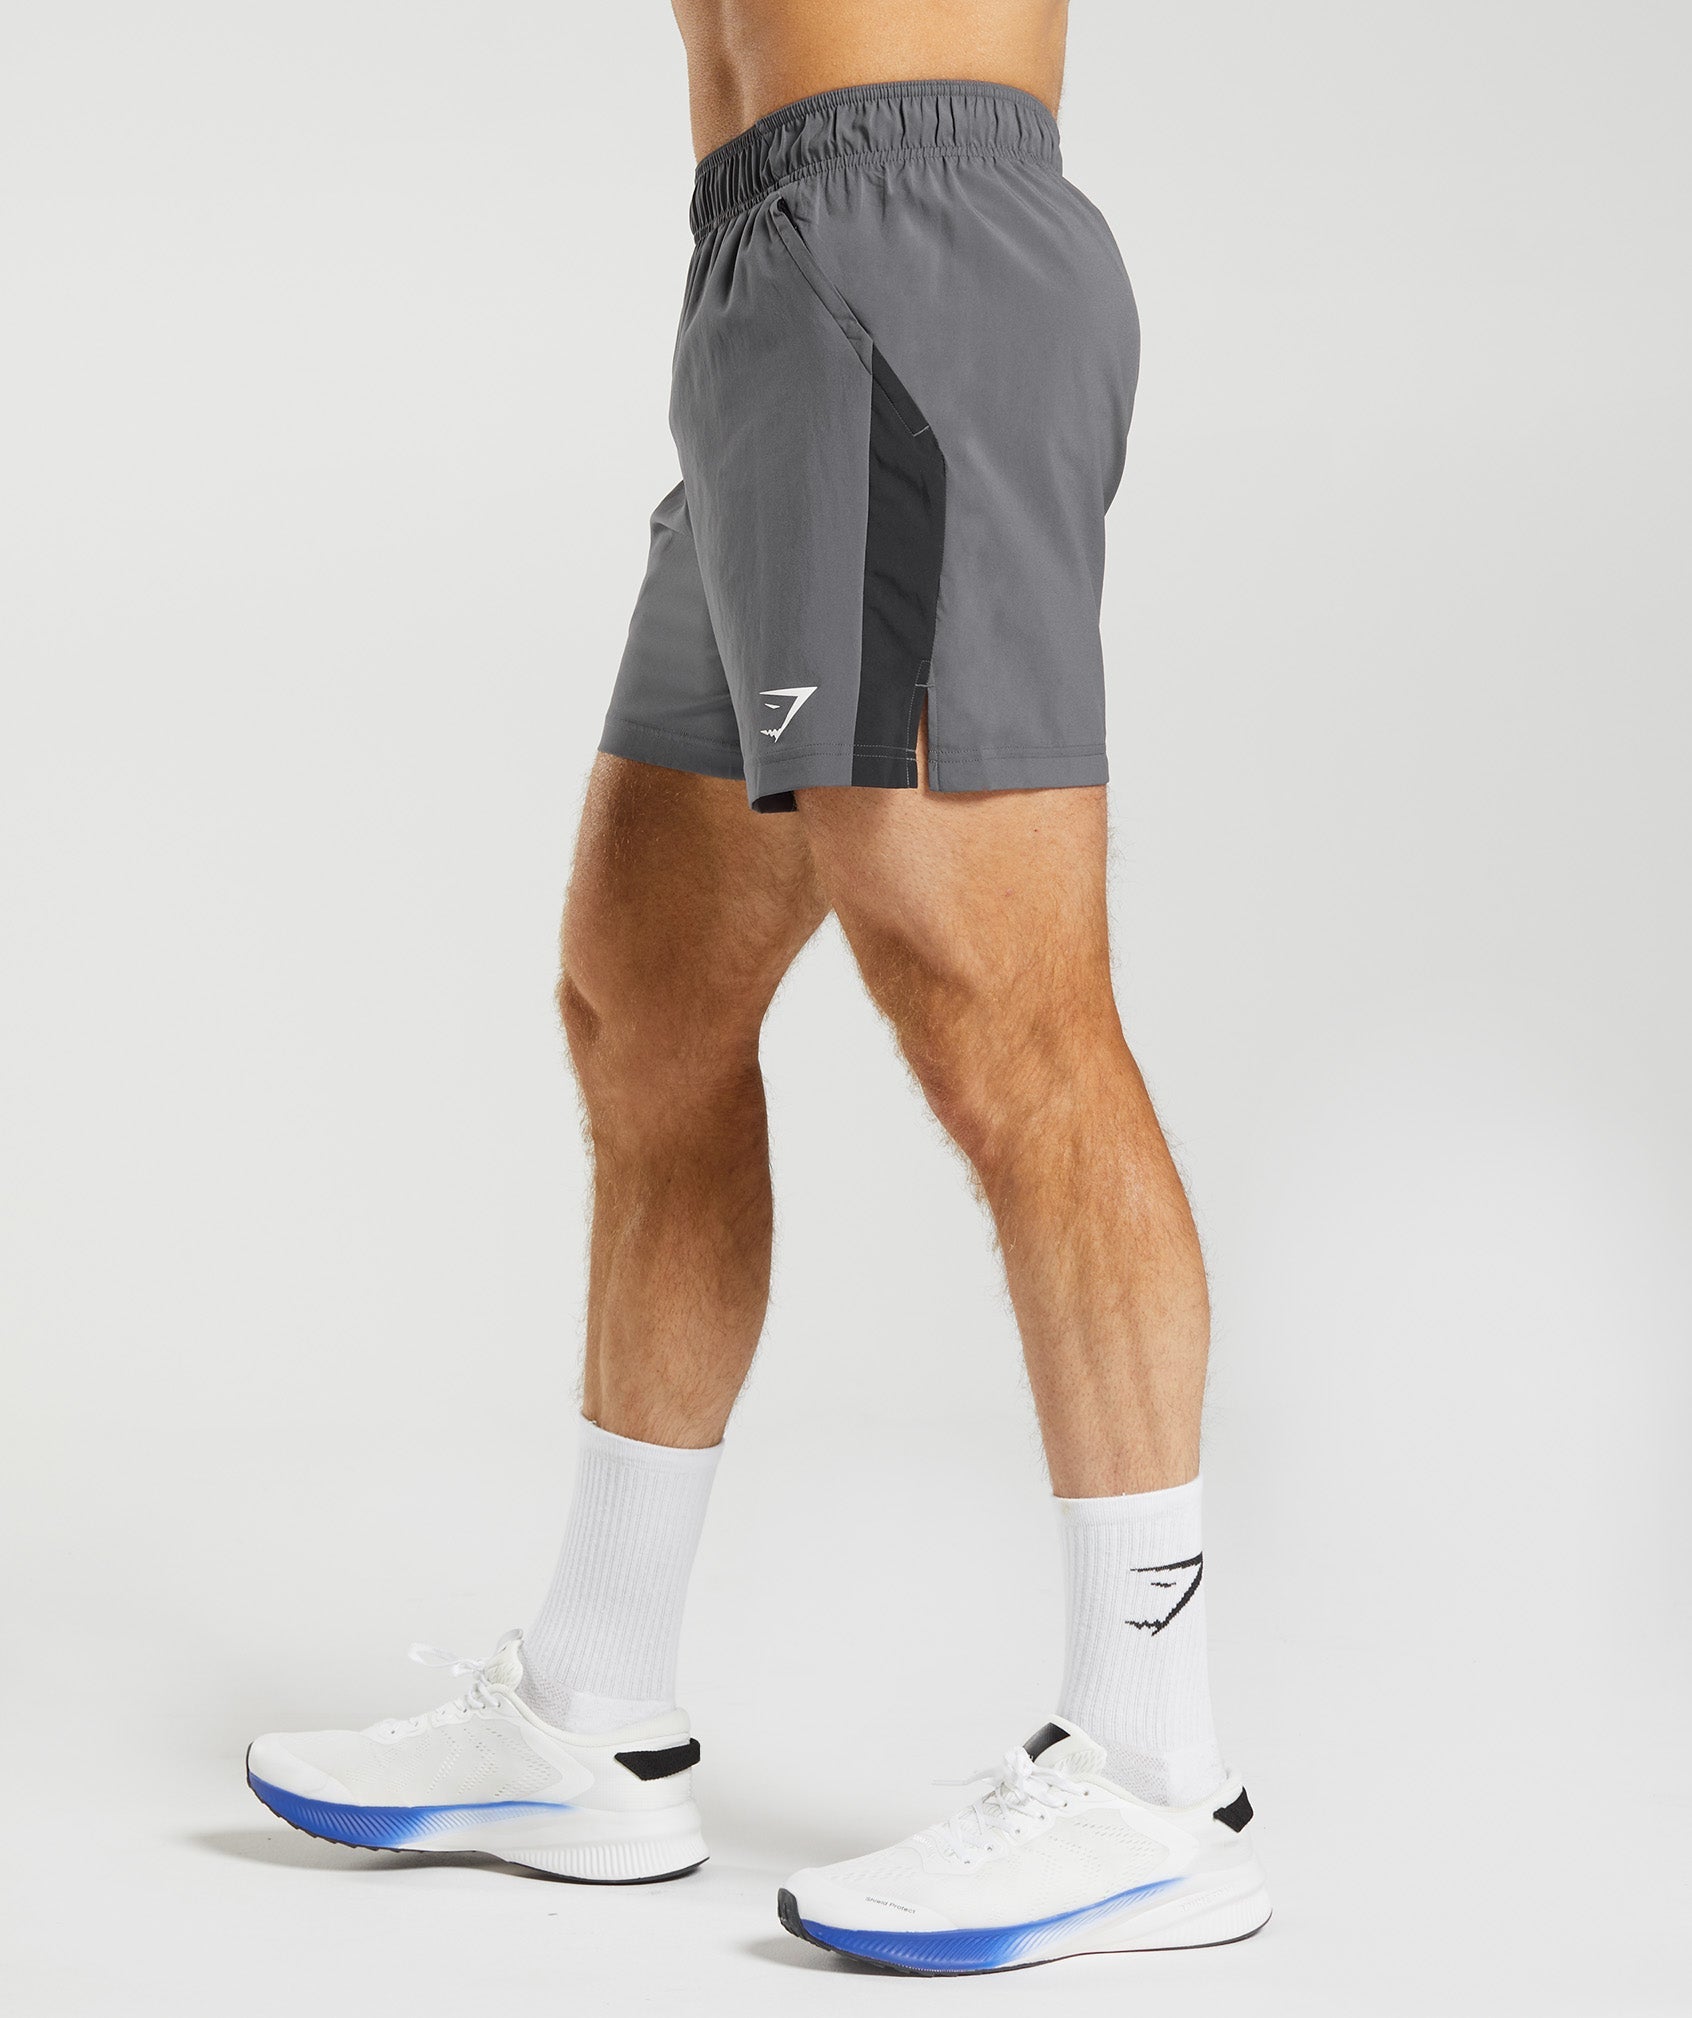 Sport Shorts in Silhouette Grey/Black